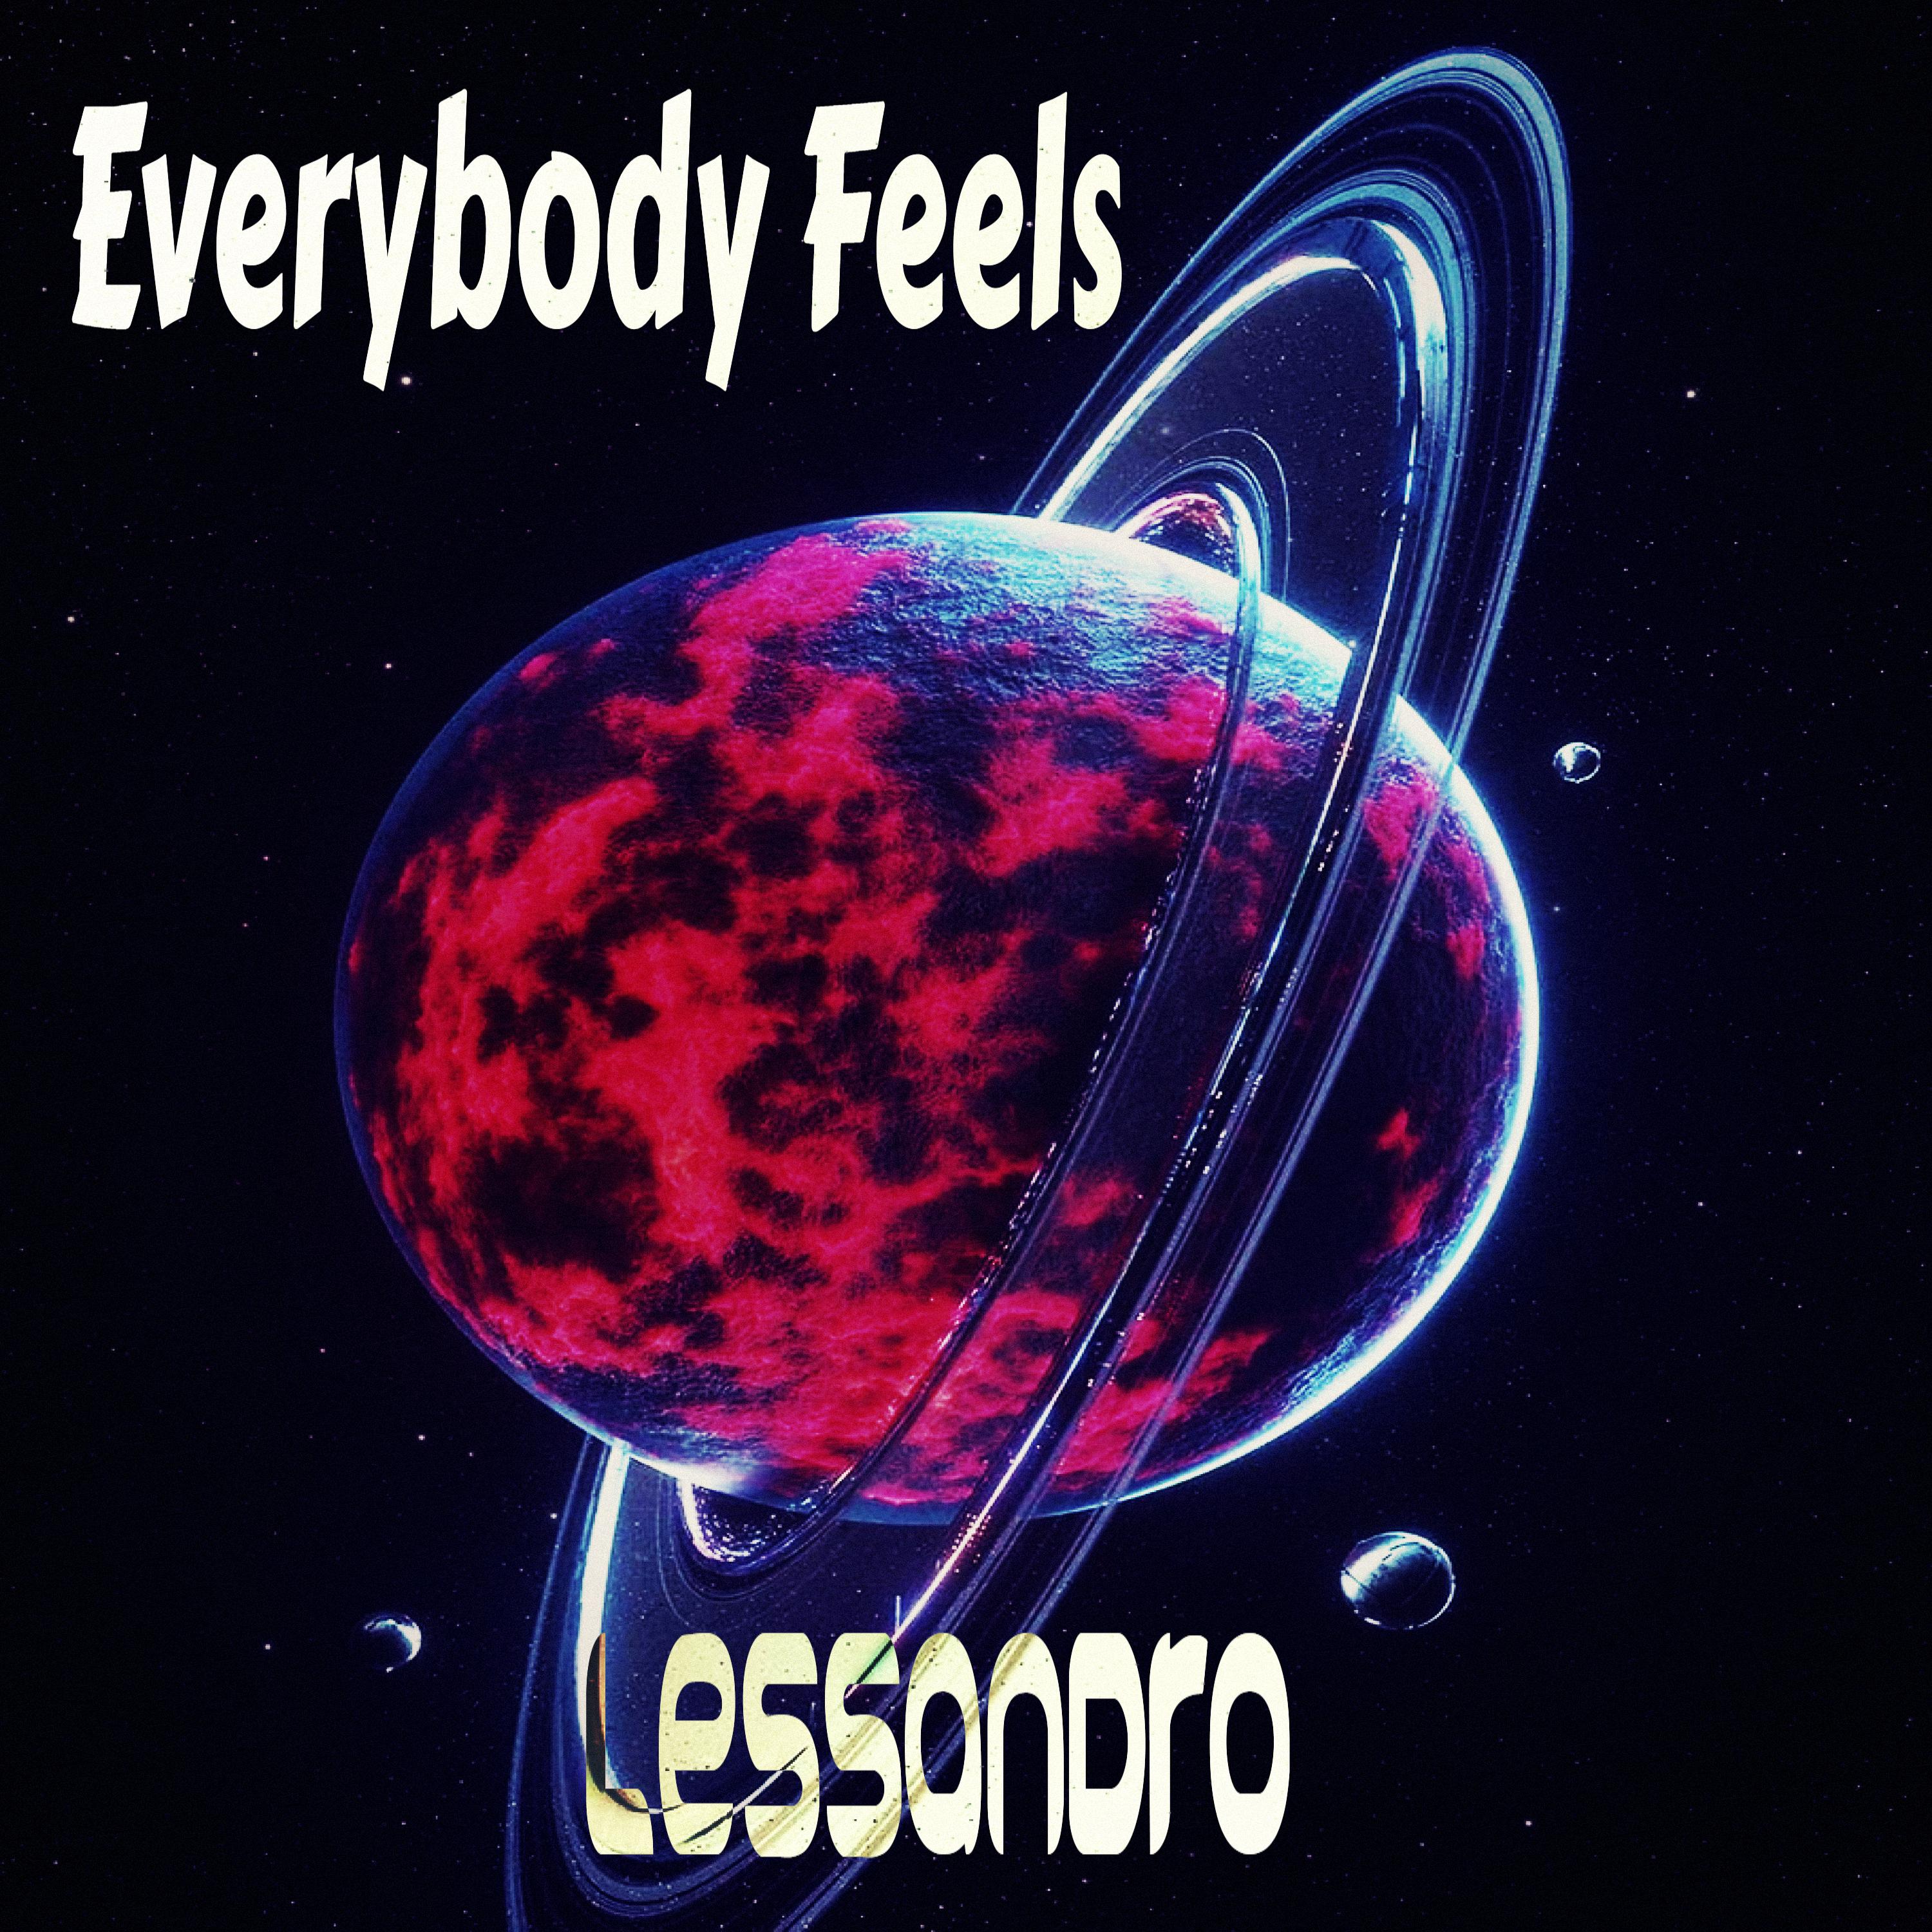 Everybody feel